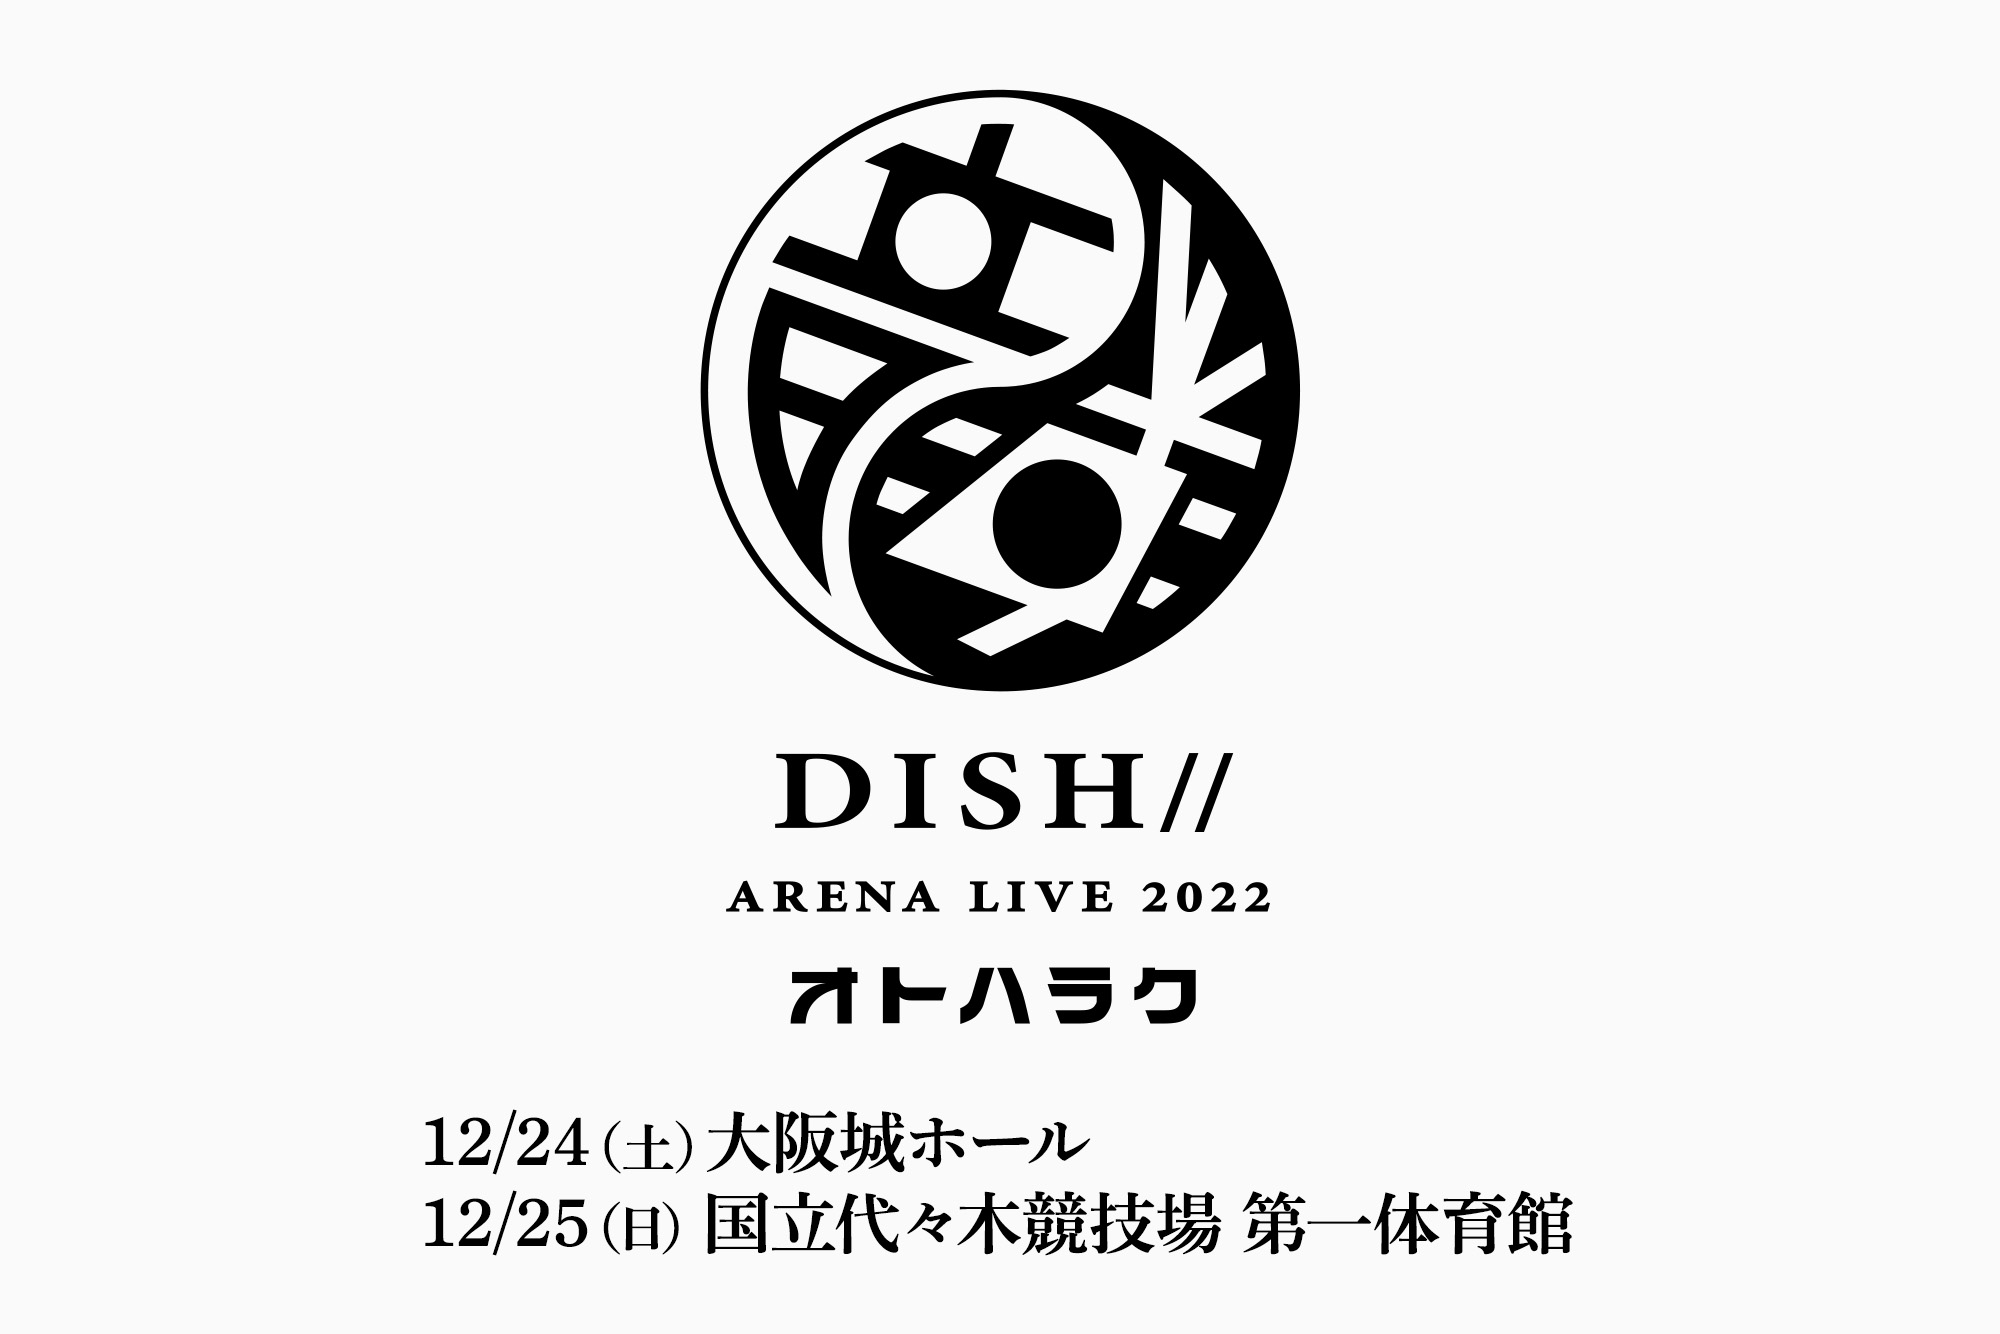 DISH// ARENA LIVE 2022